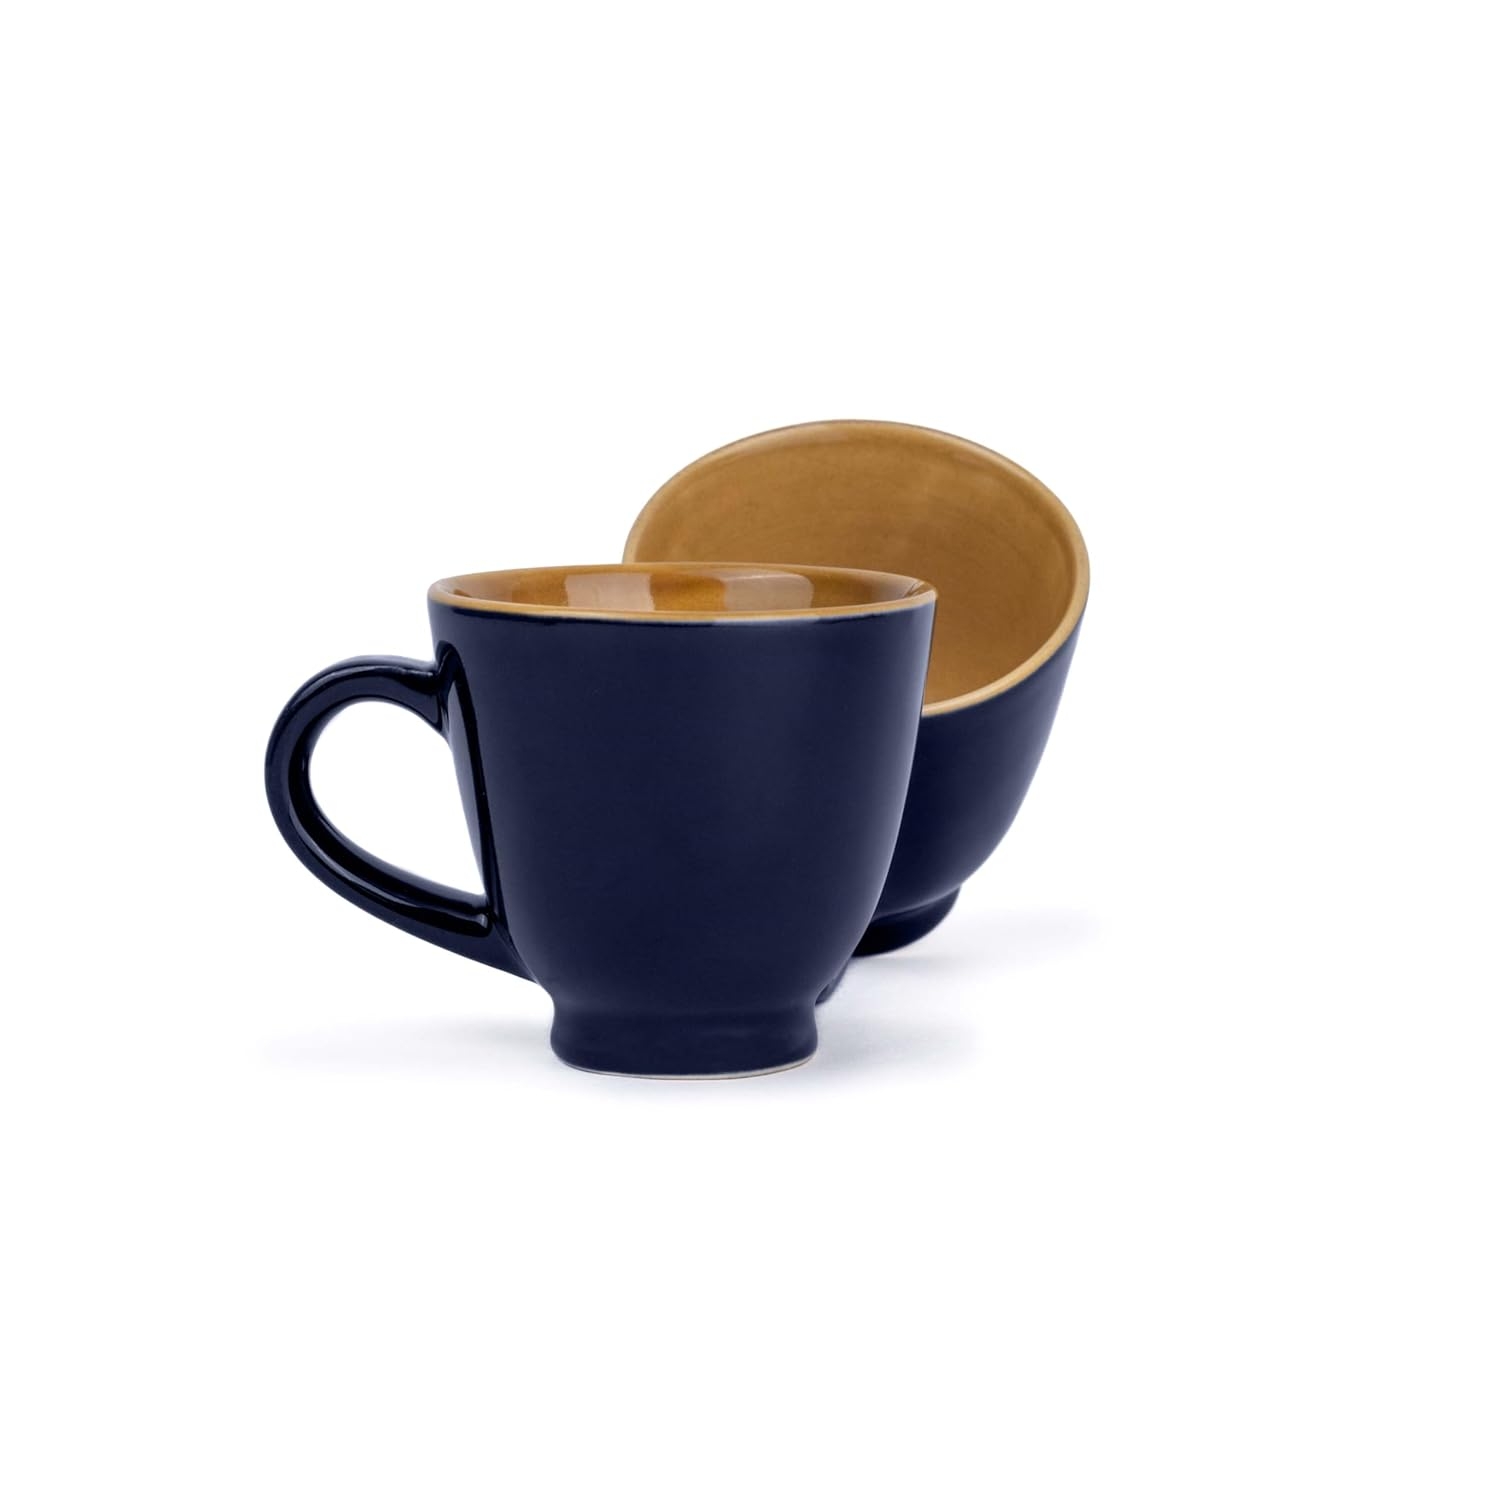 Ceramic Tea Cups 180ml | Glossy Finish | Premium Stoneware | Small Cups for Tea - 6 Pcs, Midnight Blue